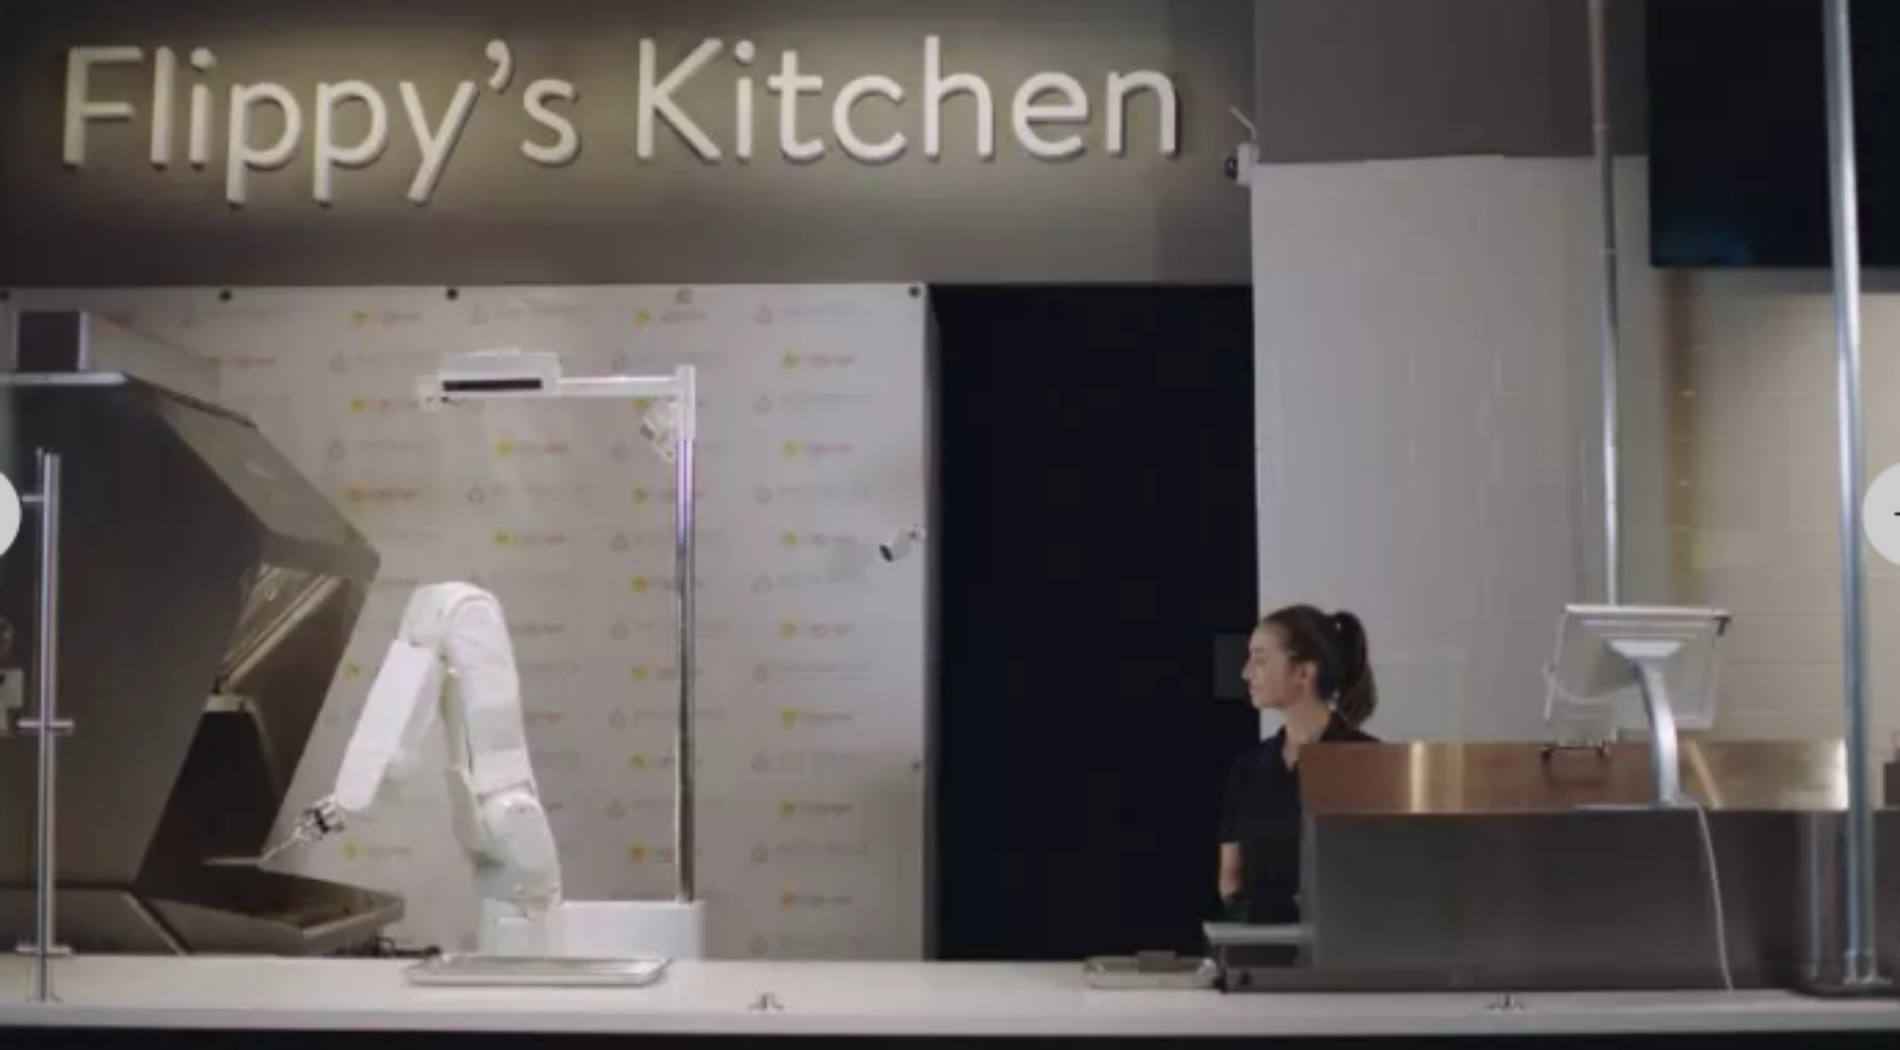 Flippy the Robot Kitchen Assistant